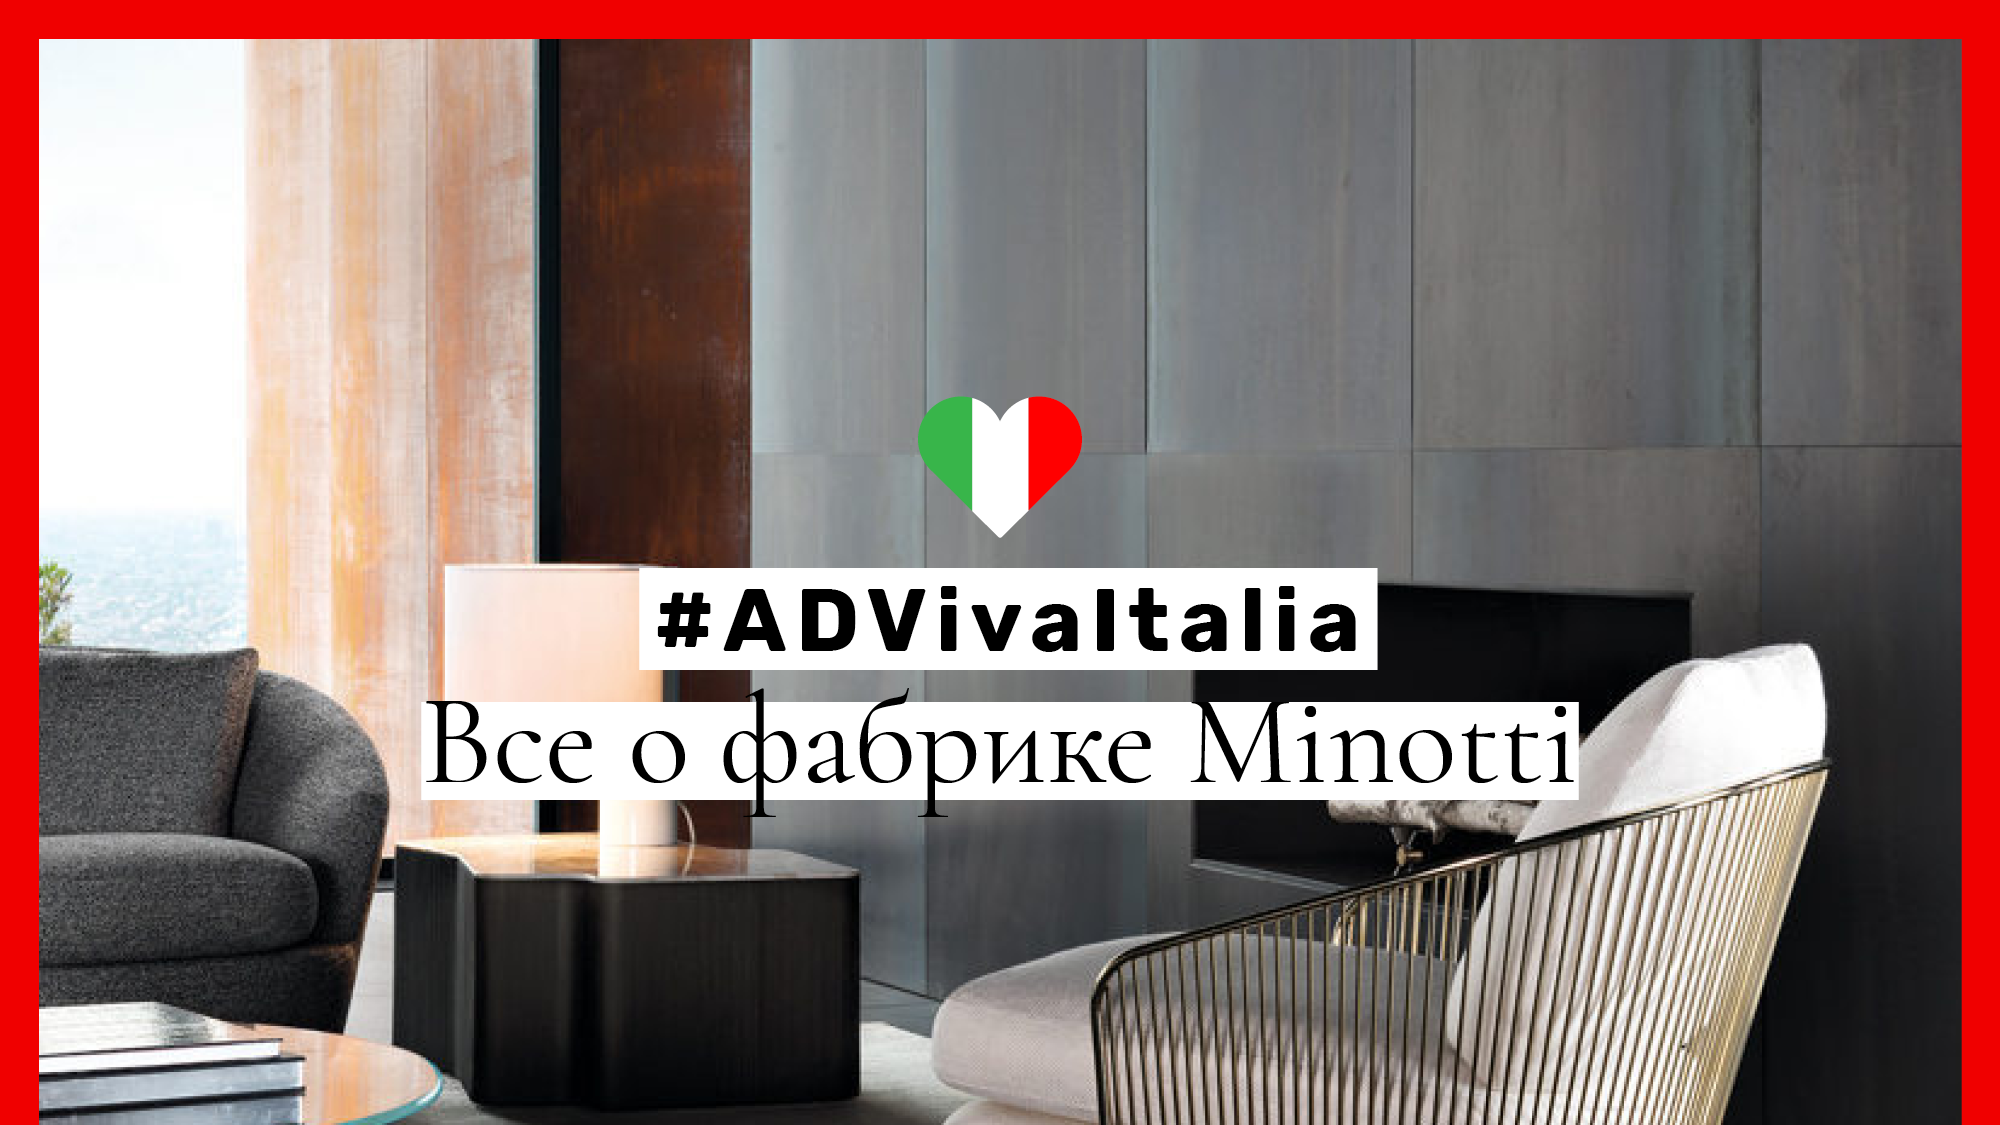 ADVivaItalia все о фабрике Minotti